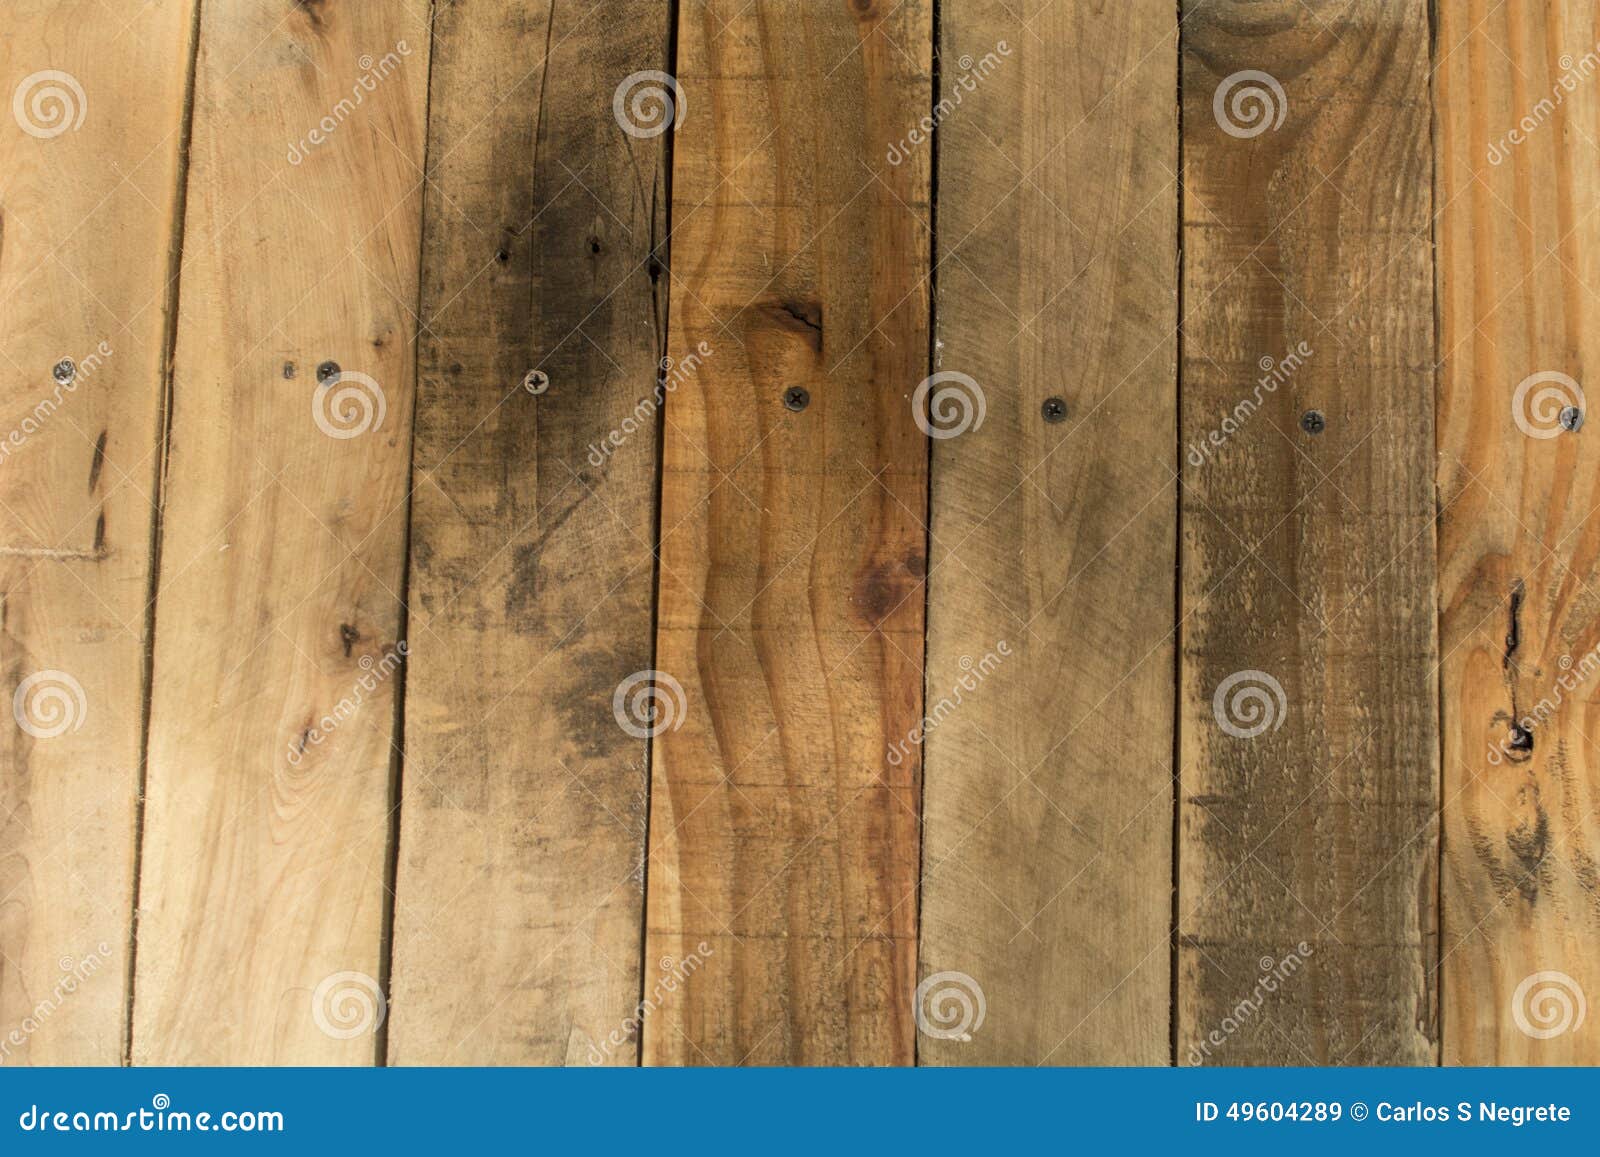 Pallet Wood